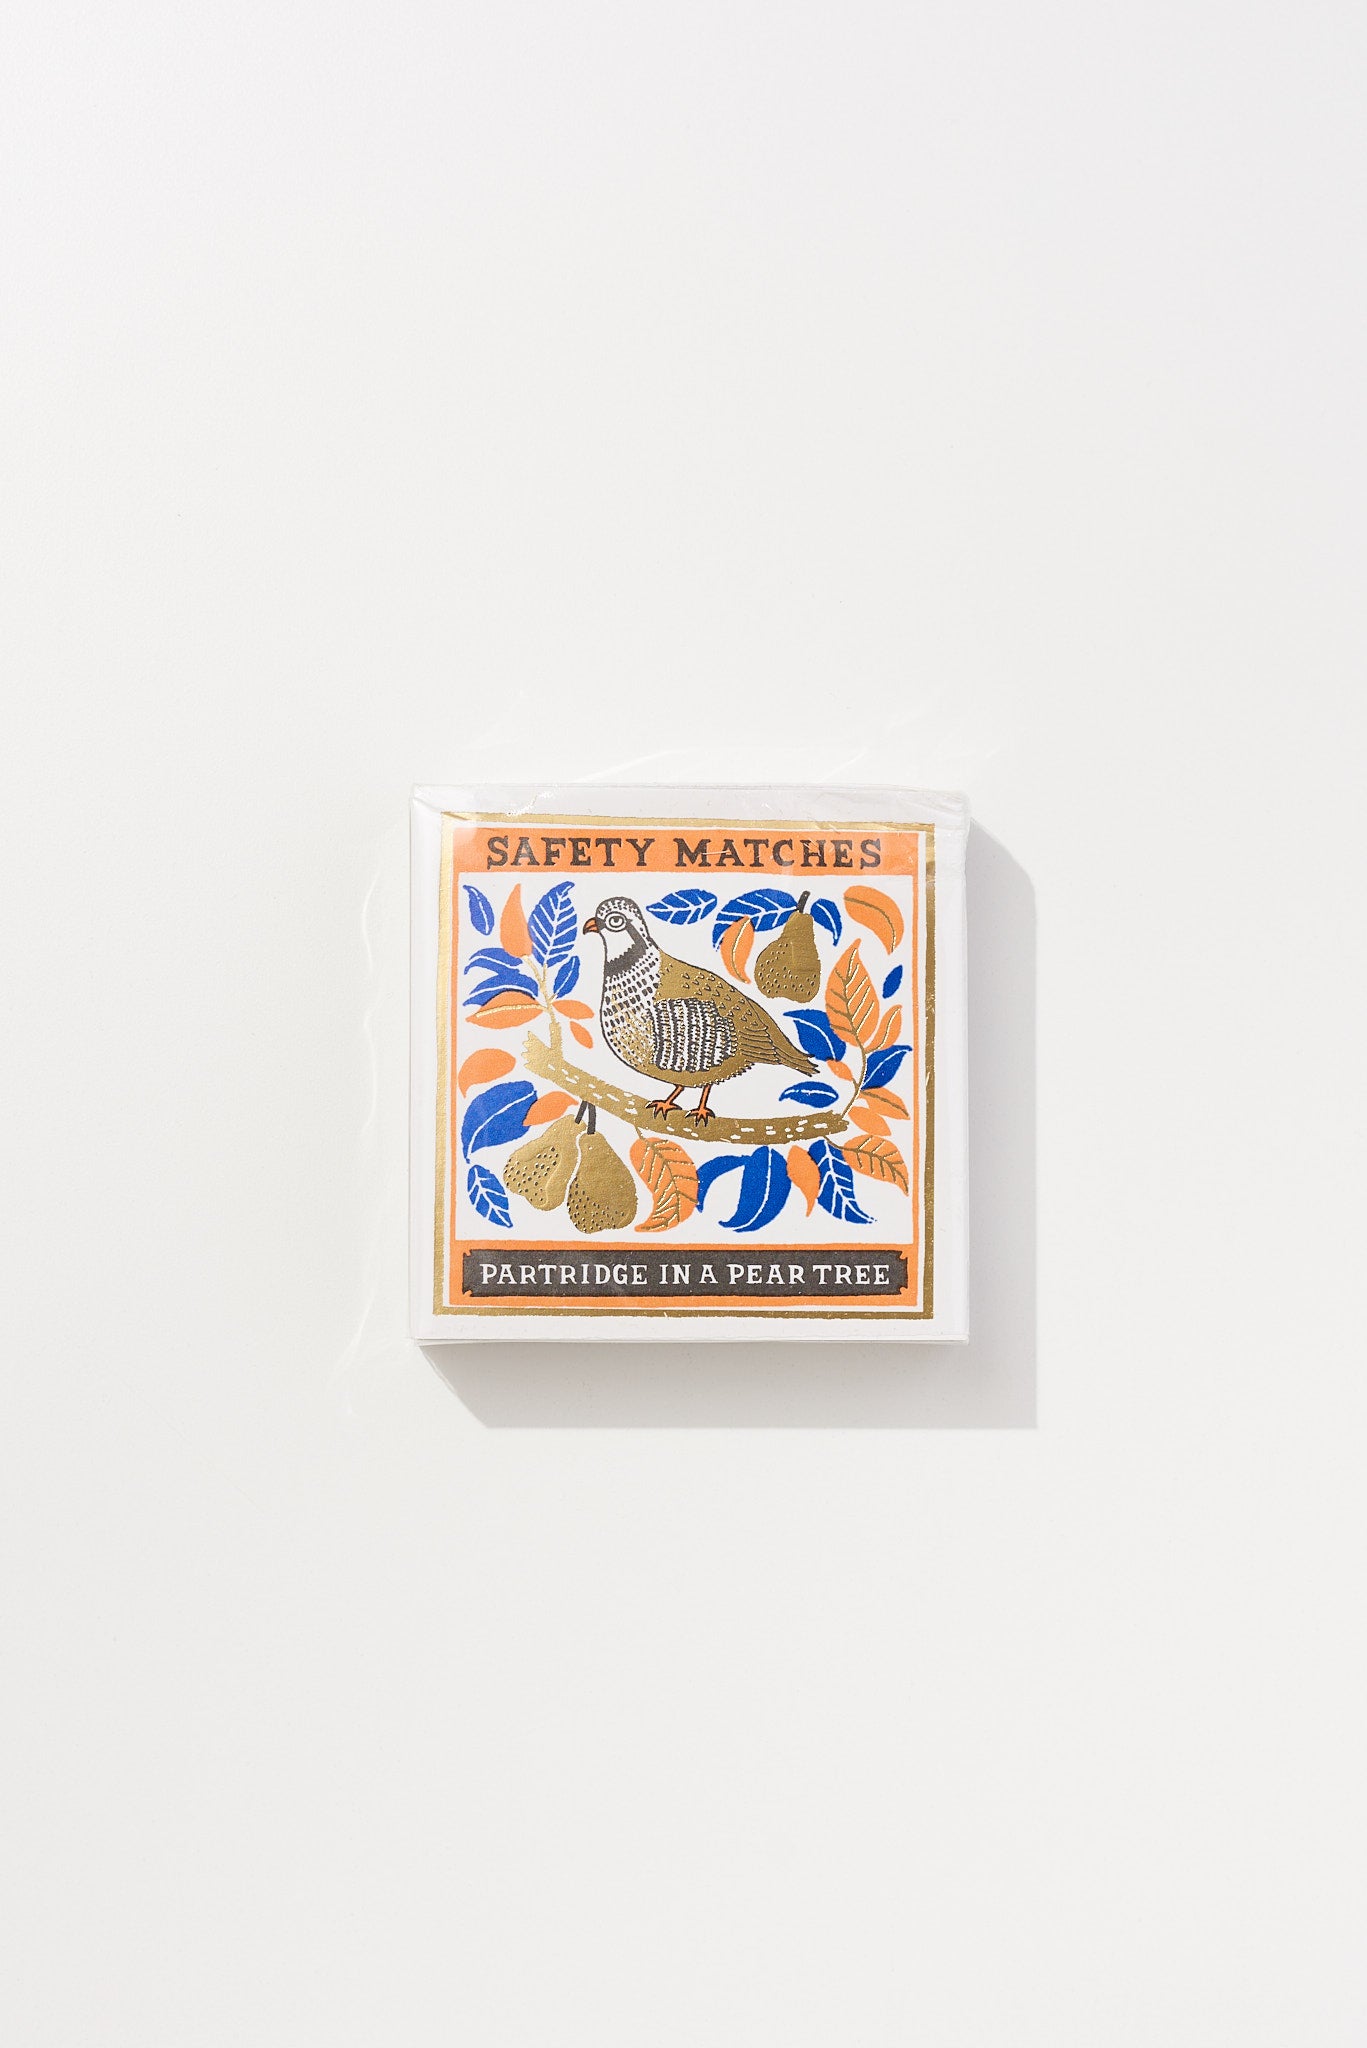 Matchbox / Partridge in a Pear Tree